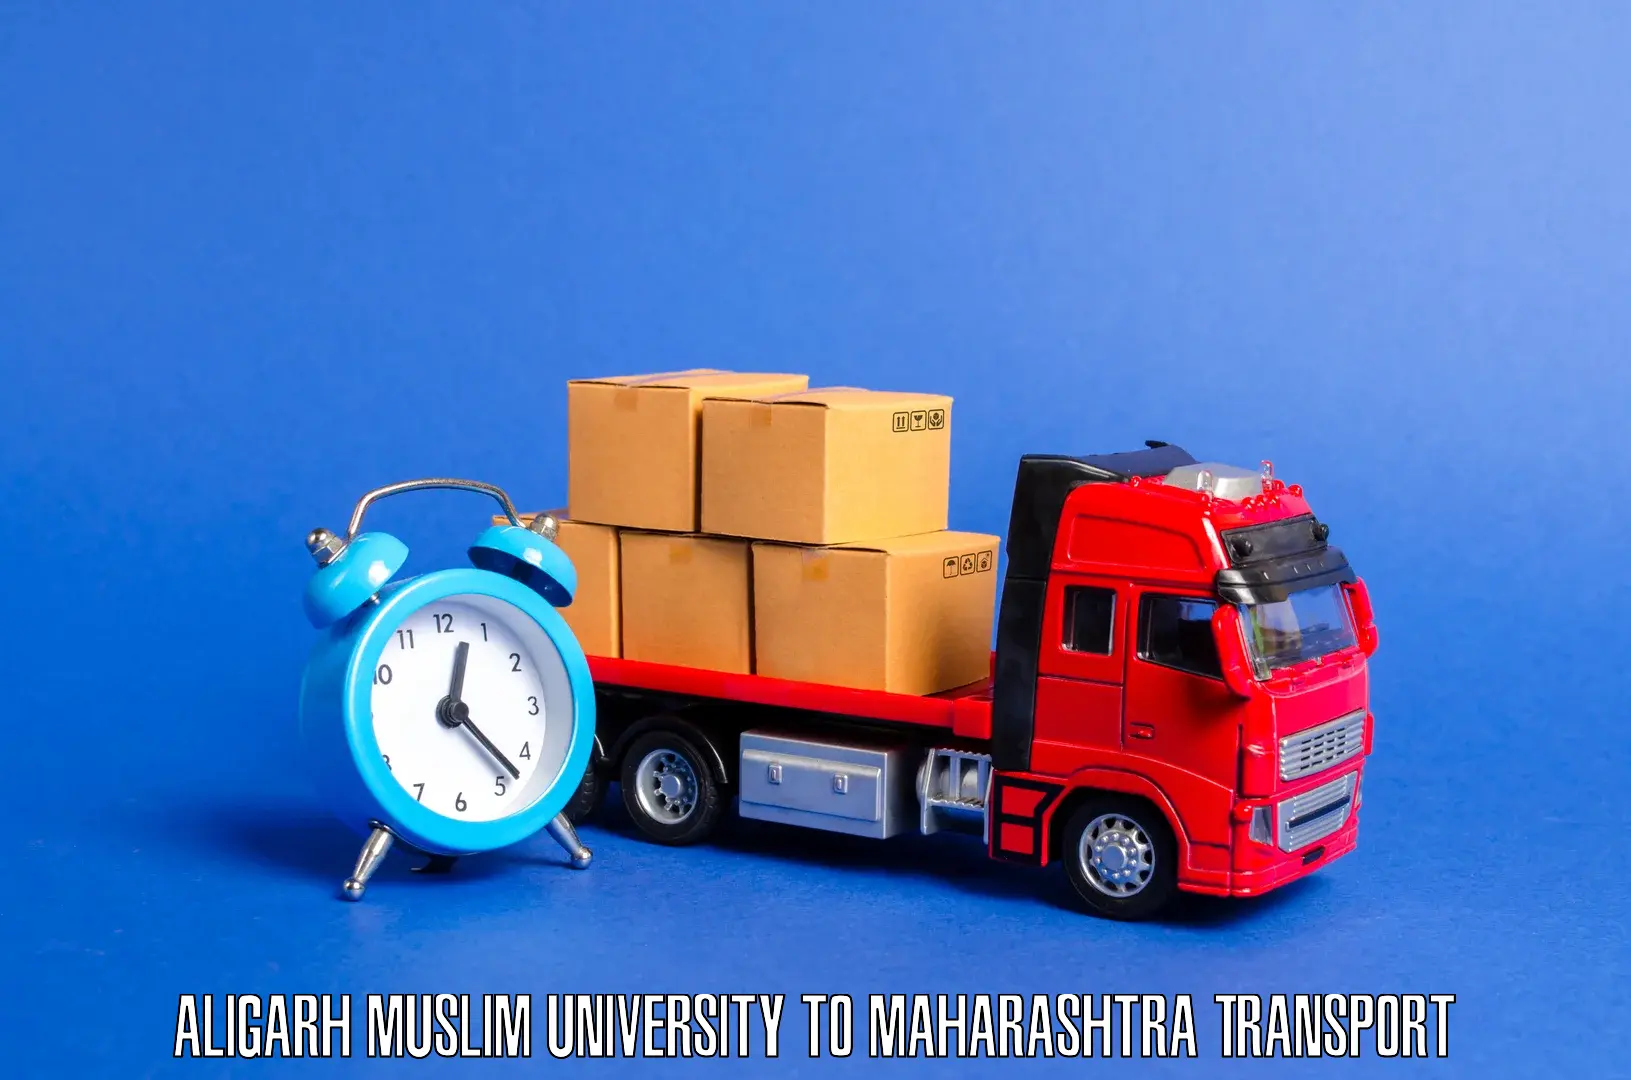 Lorry transport service Aligarh Muslim University to Alibag